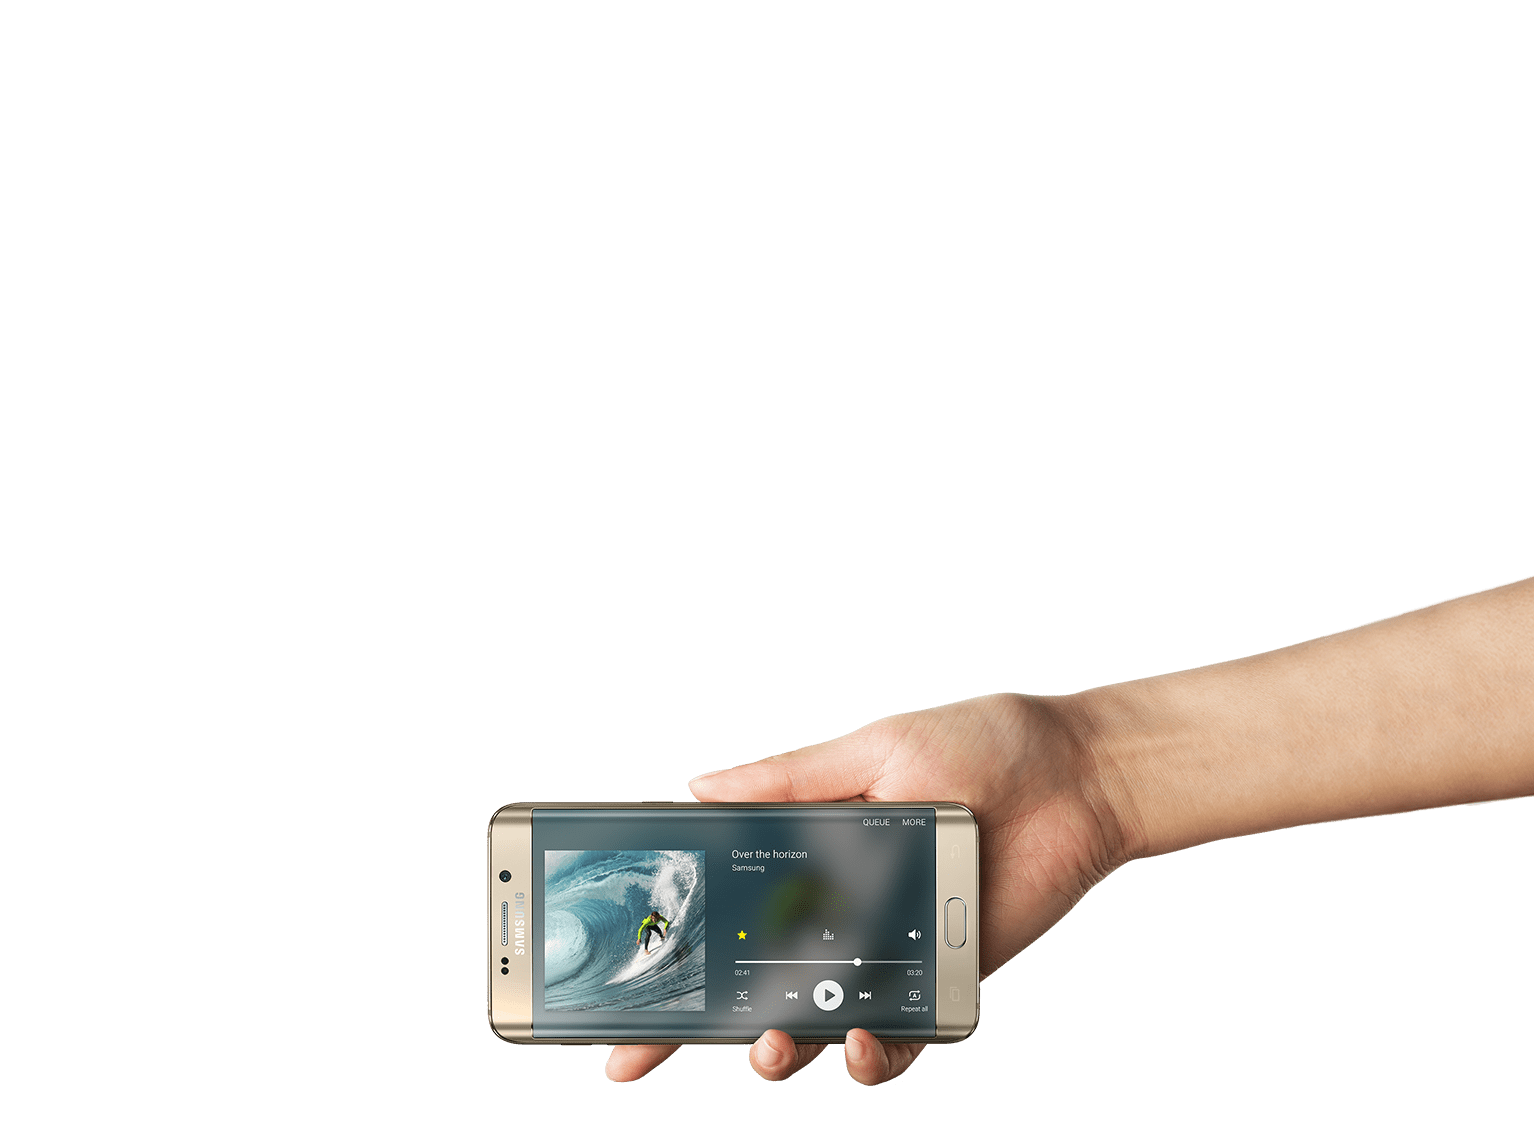 Gold Platinum Galaxy S6 Edge Plus Playing Music - Samsung Galaxy S6 - HD Wallpaper 